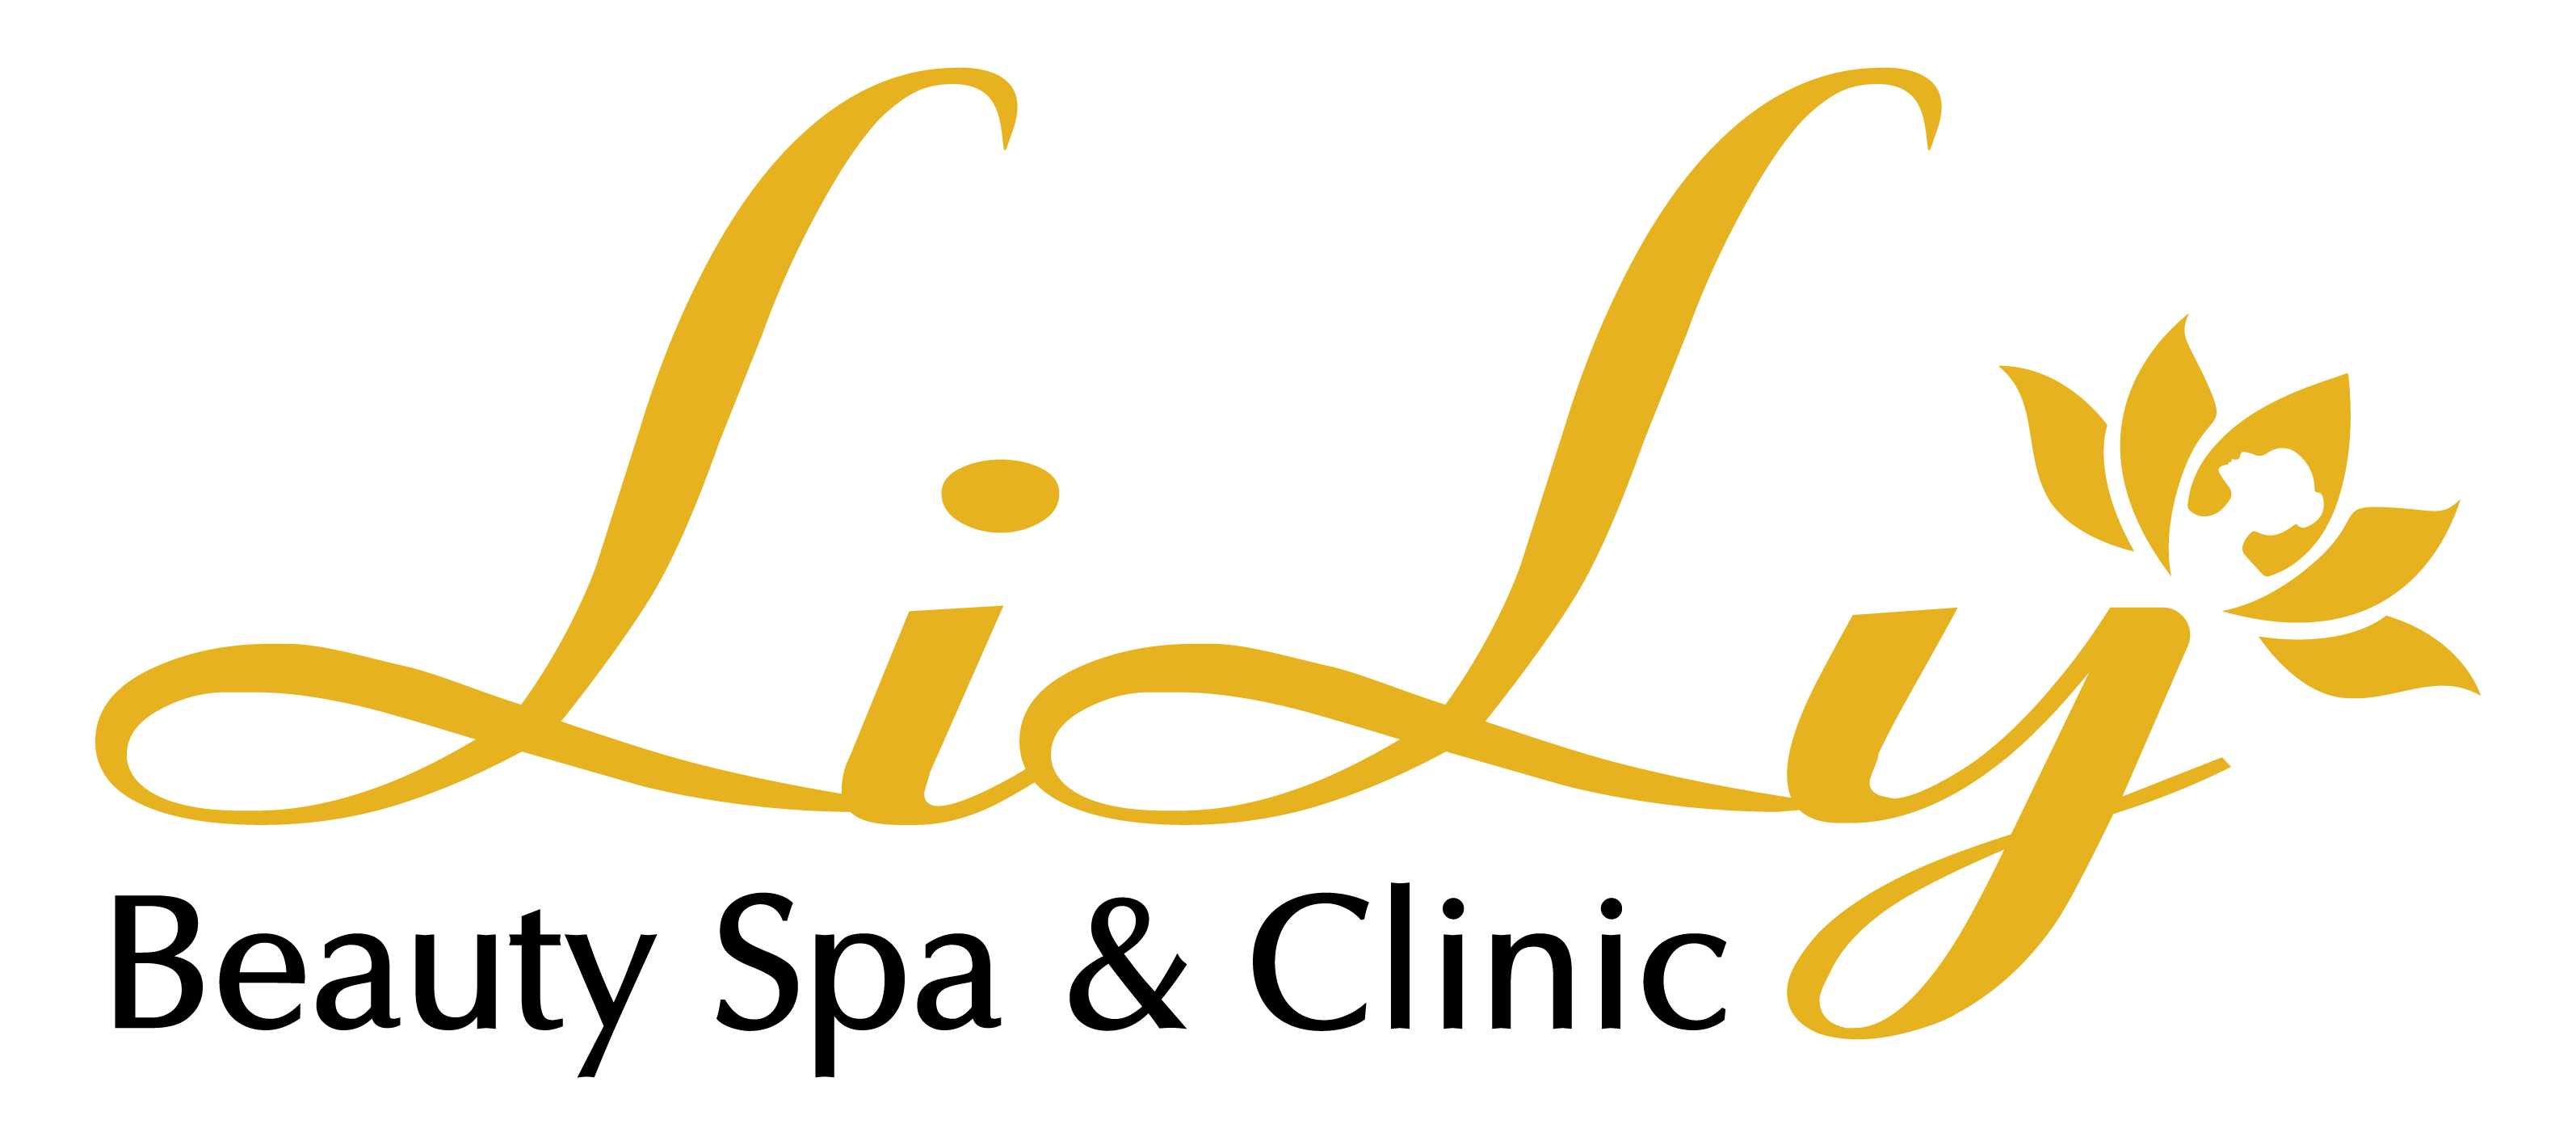 LiLy Beauty Spa & Clinic 